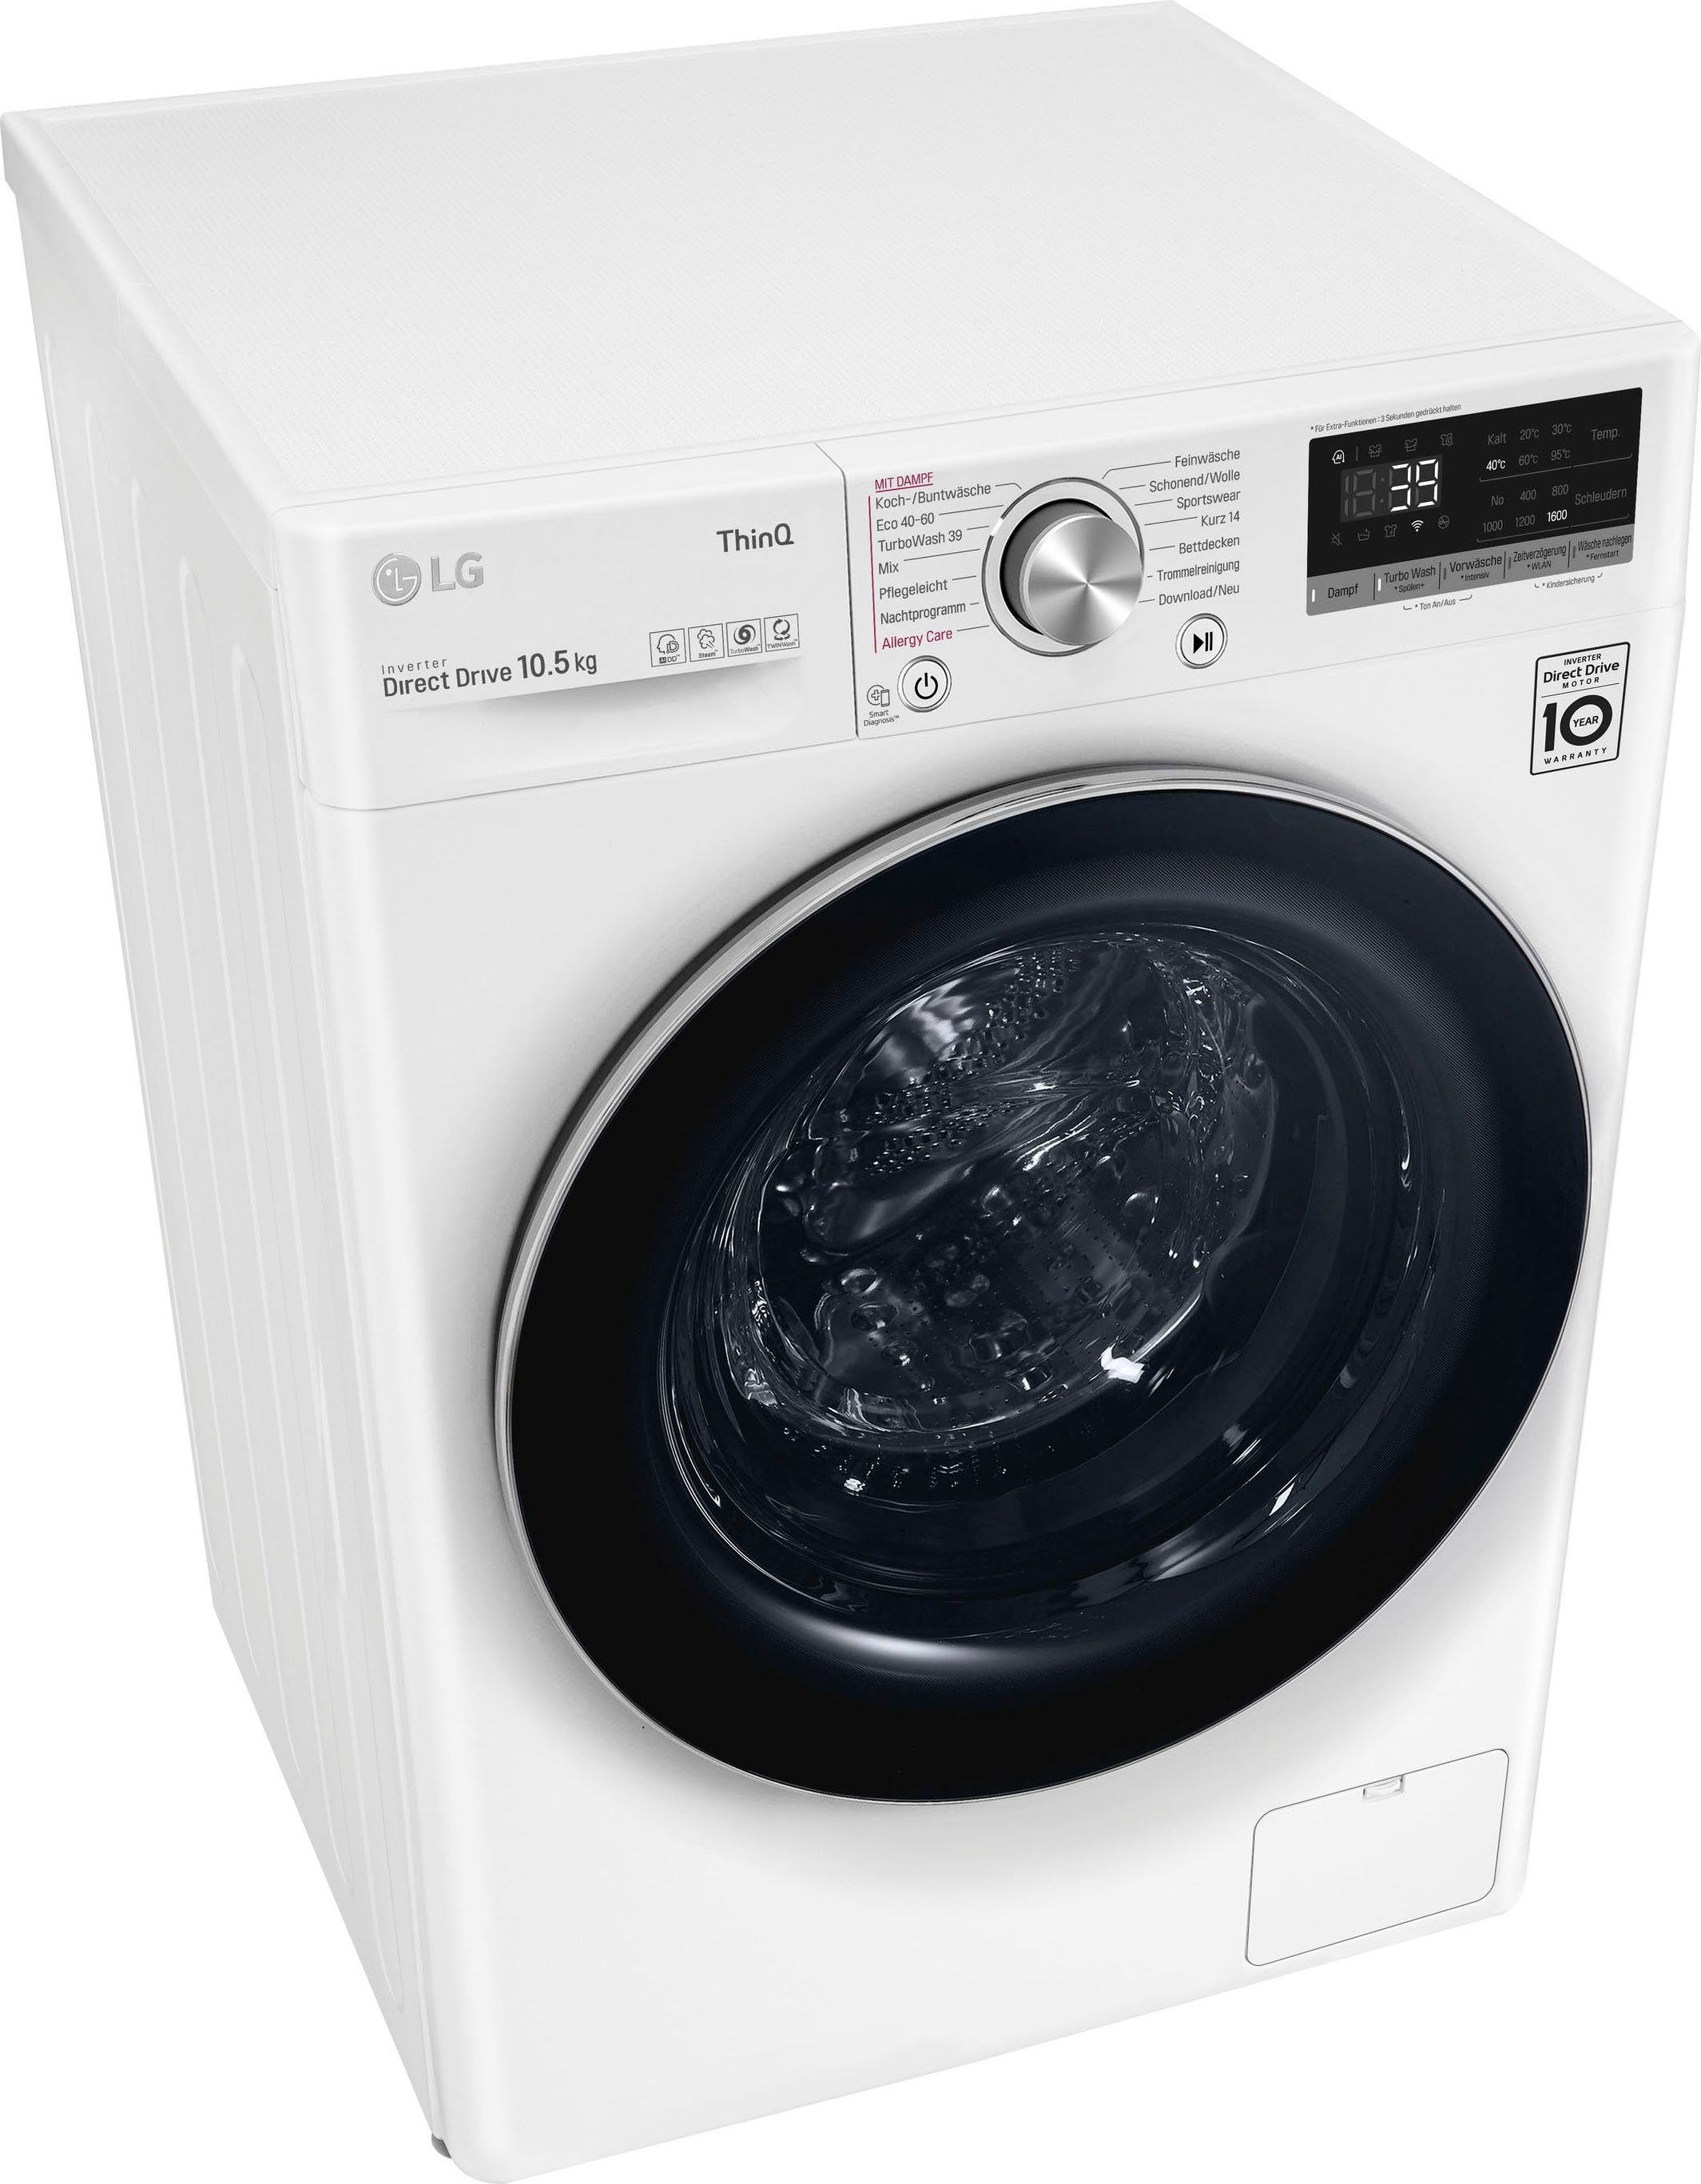 LG Waschmaschine U/min 1400 Serie 7 F4WR7012, 11 kg